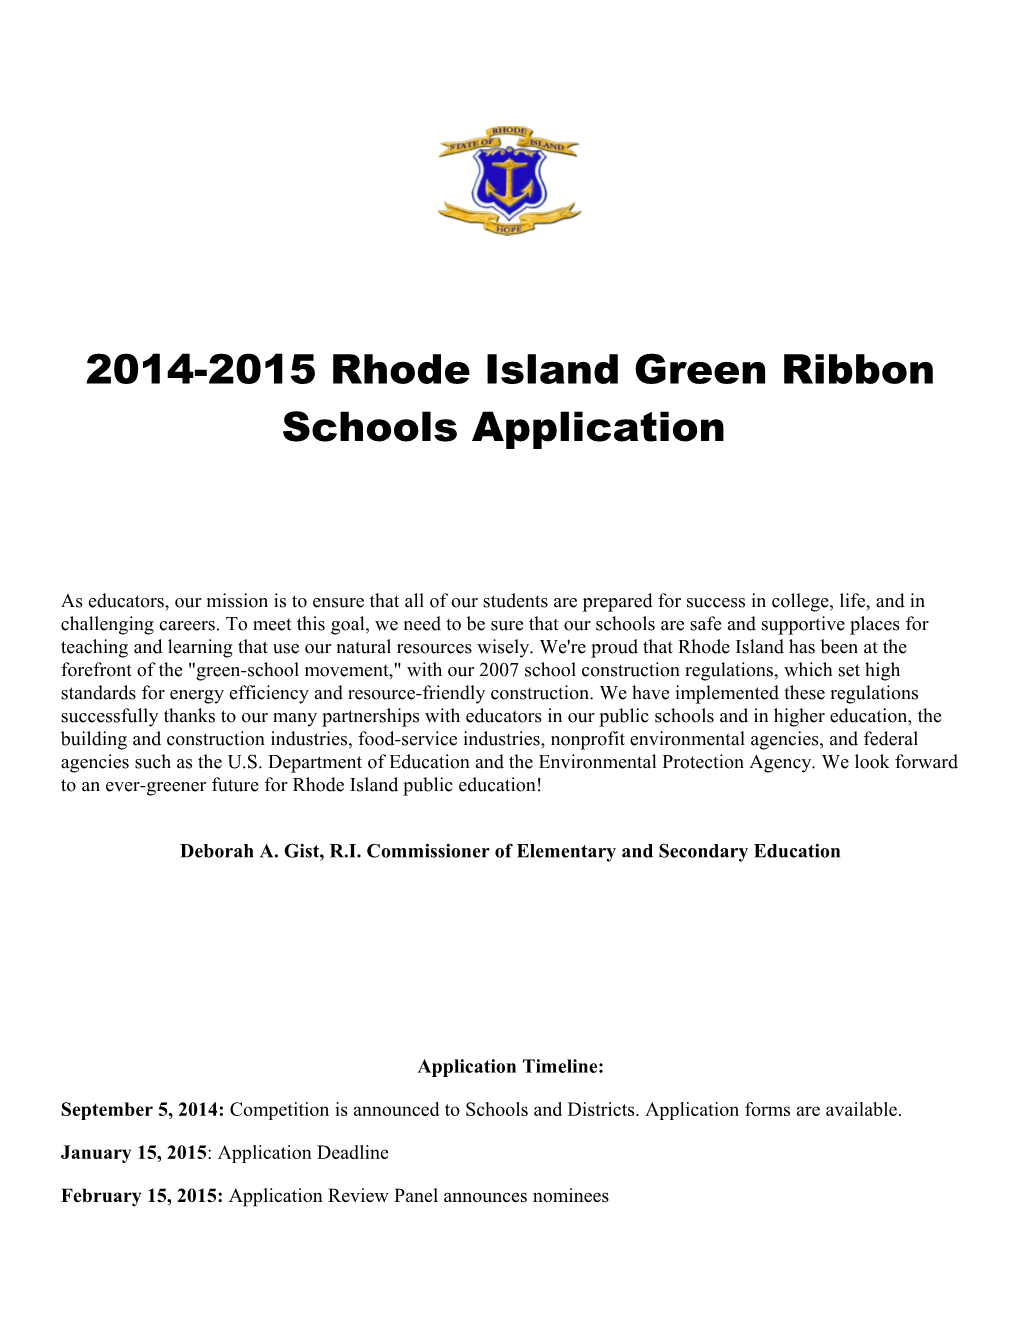 2014-2015 Rhode Island Green Ribbon Schools Application